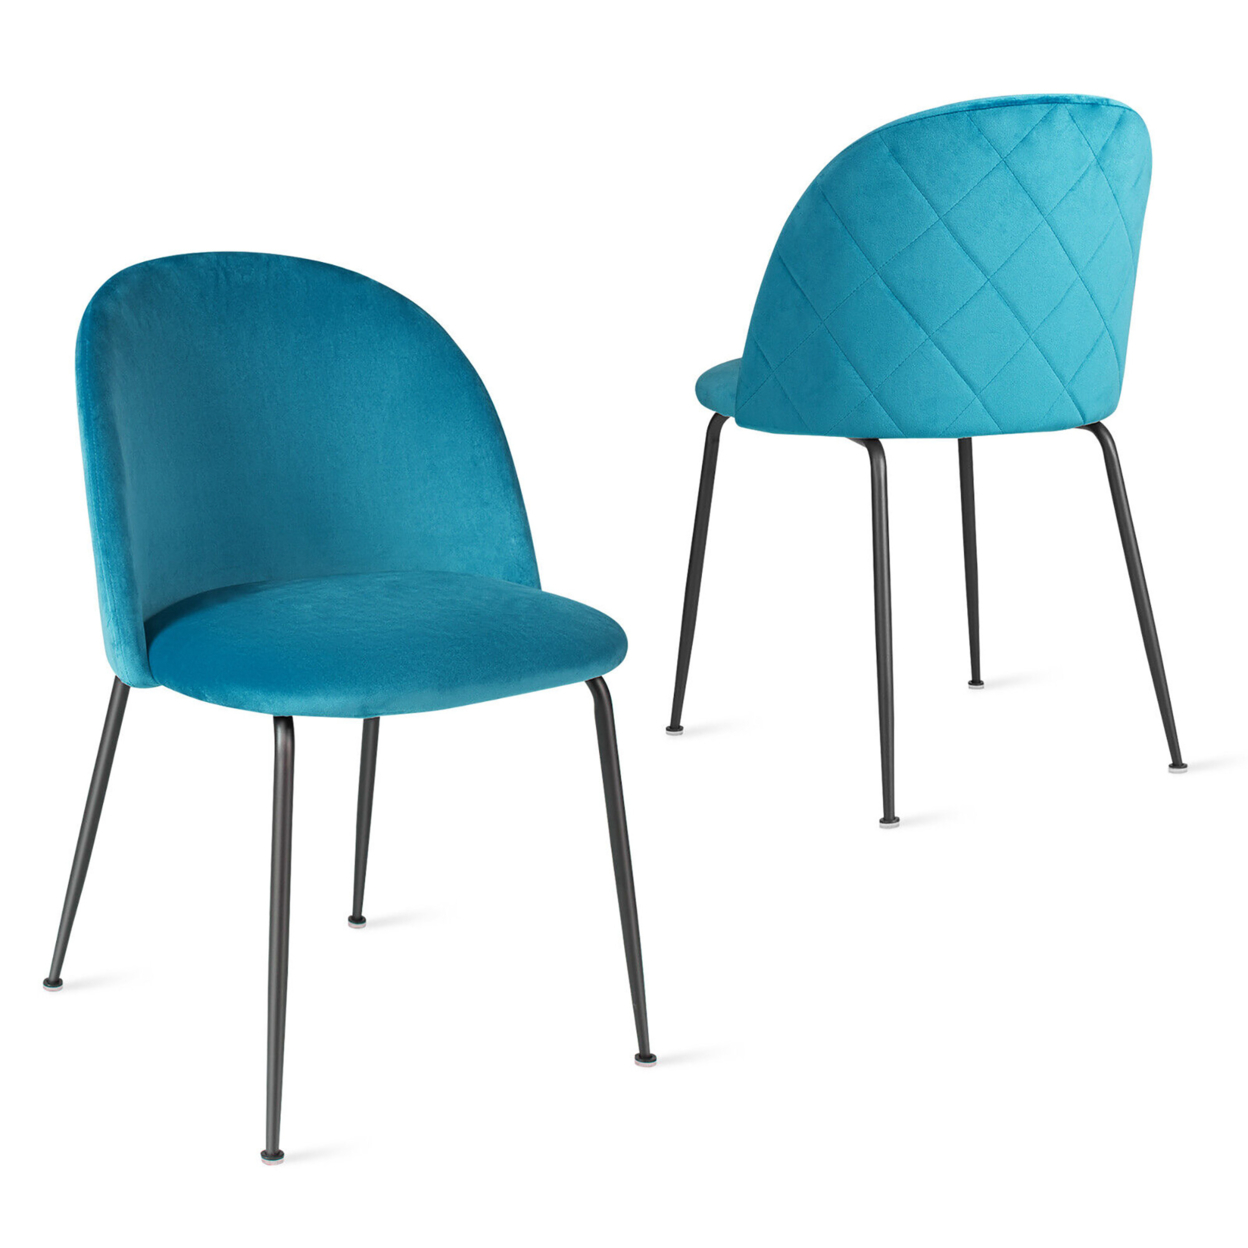 Dining Chair Set Of 2 Upholstered Velvet Chair Set W/ Metal Base For Living Room - Teal Blue